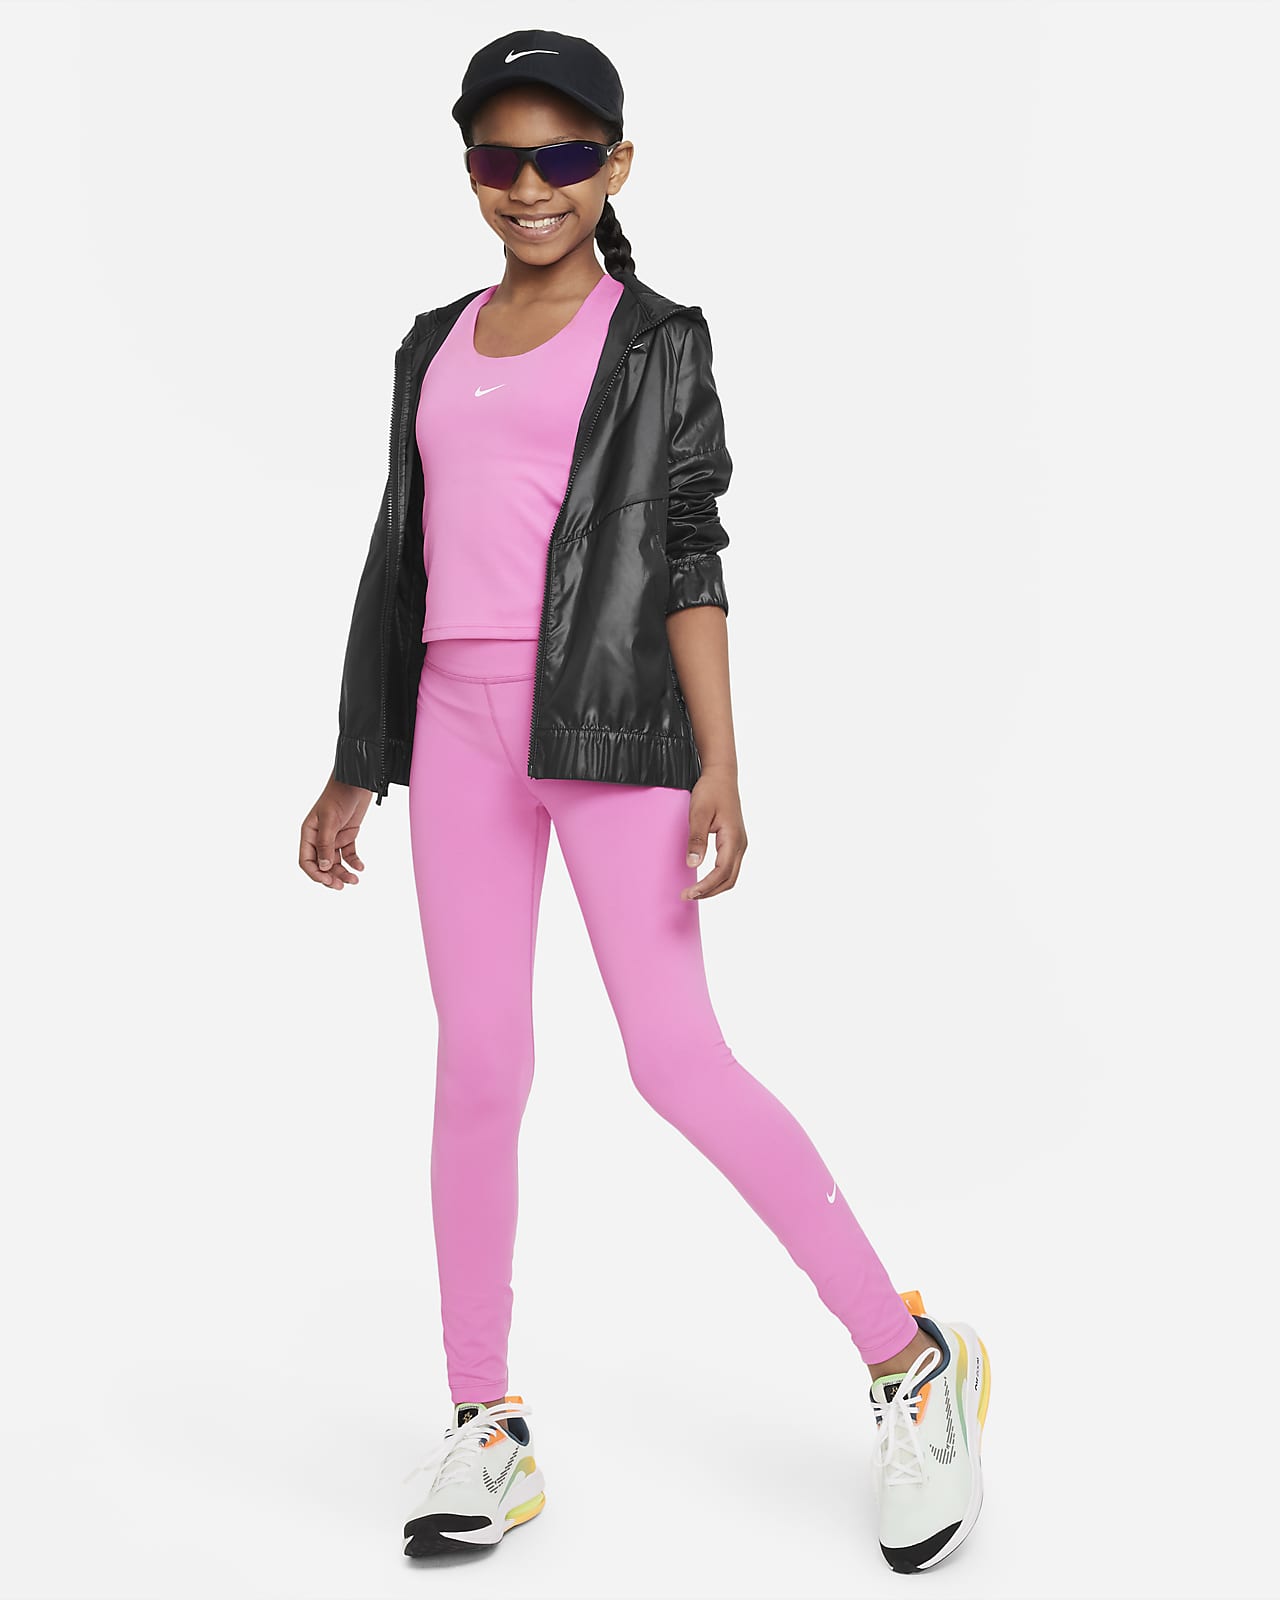 Shop Online Girls Pink All-Over Print Skirt Leggings at ₹499